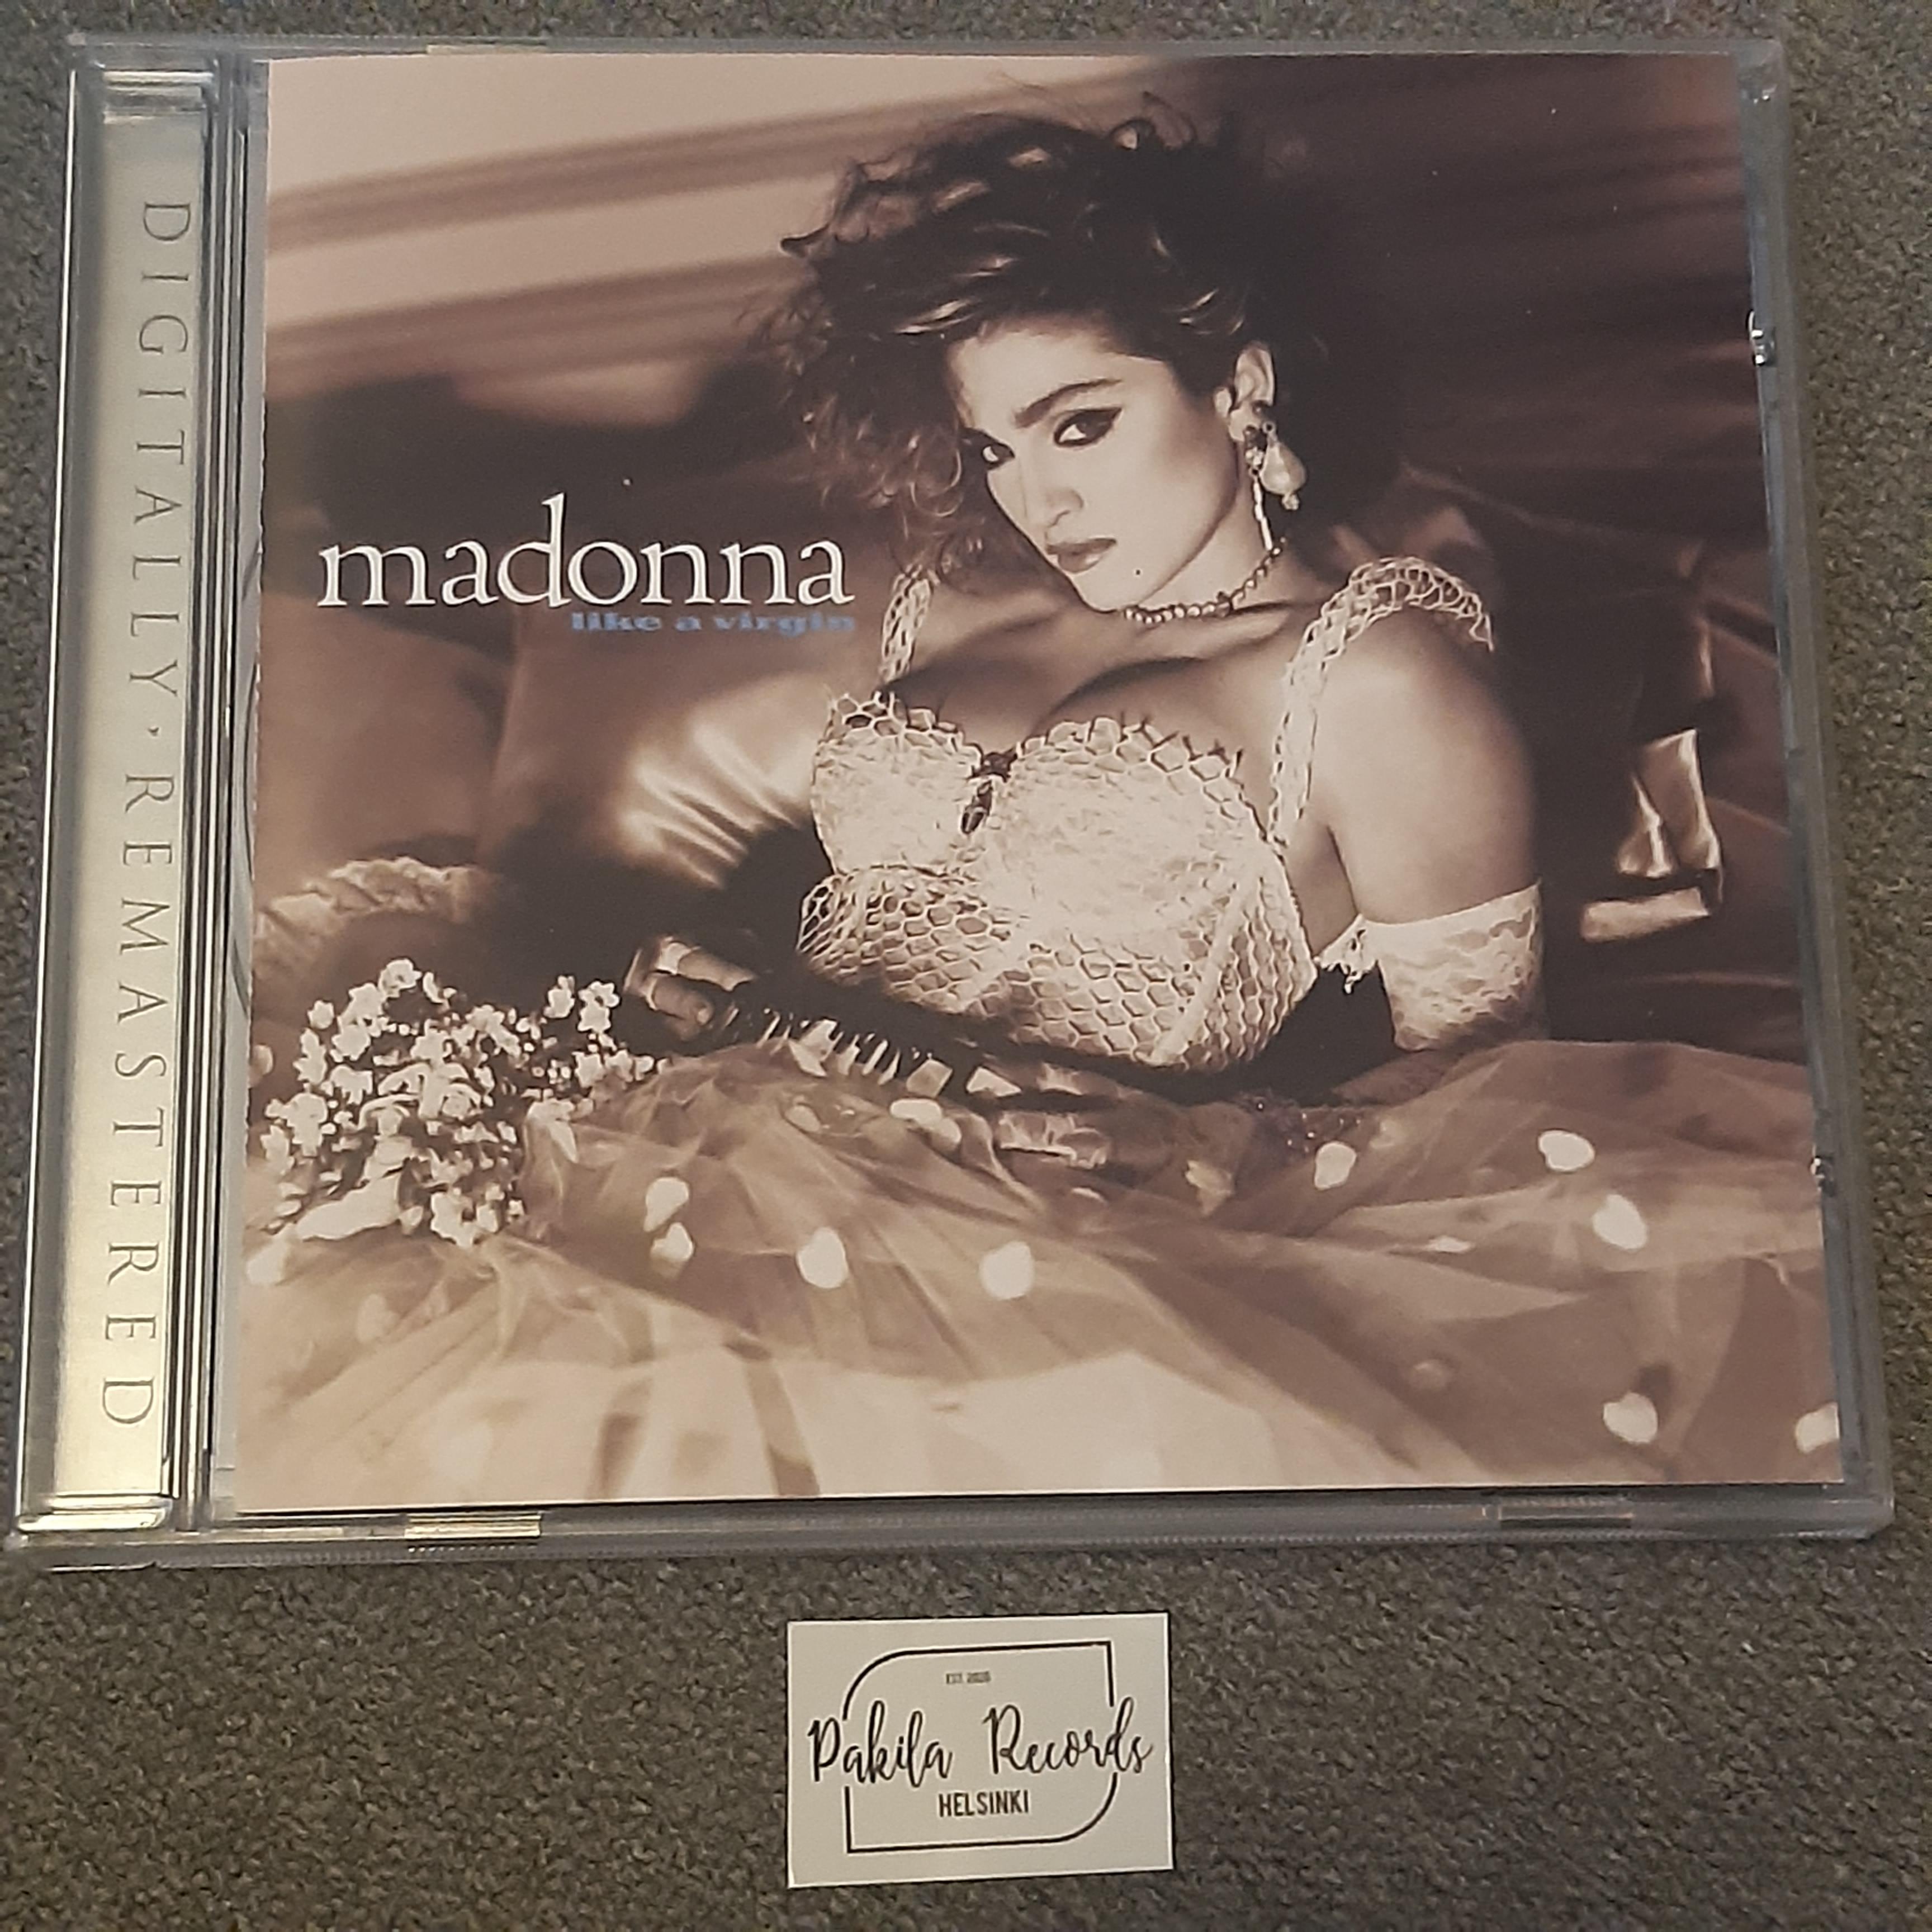 Madonna - Like A Virgin - CD (käytetty)